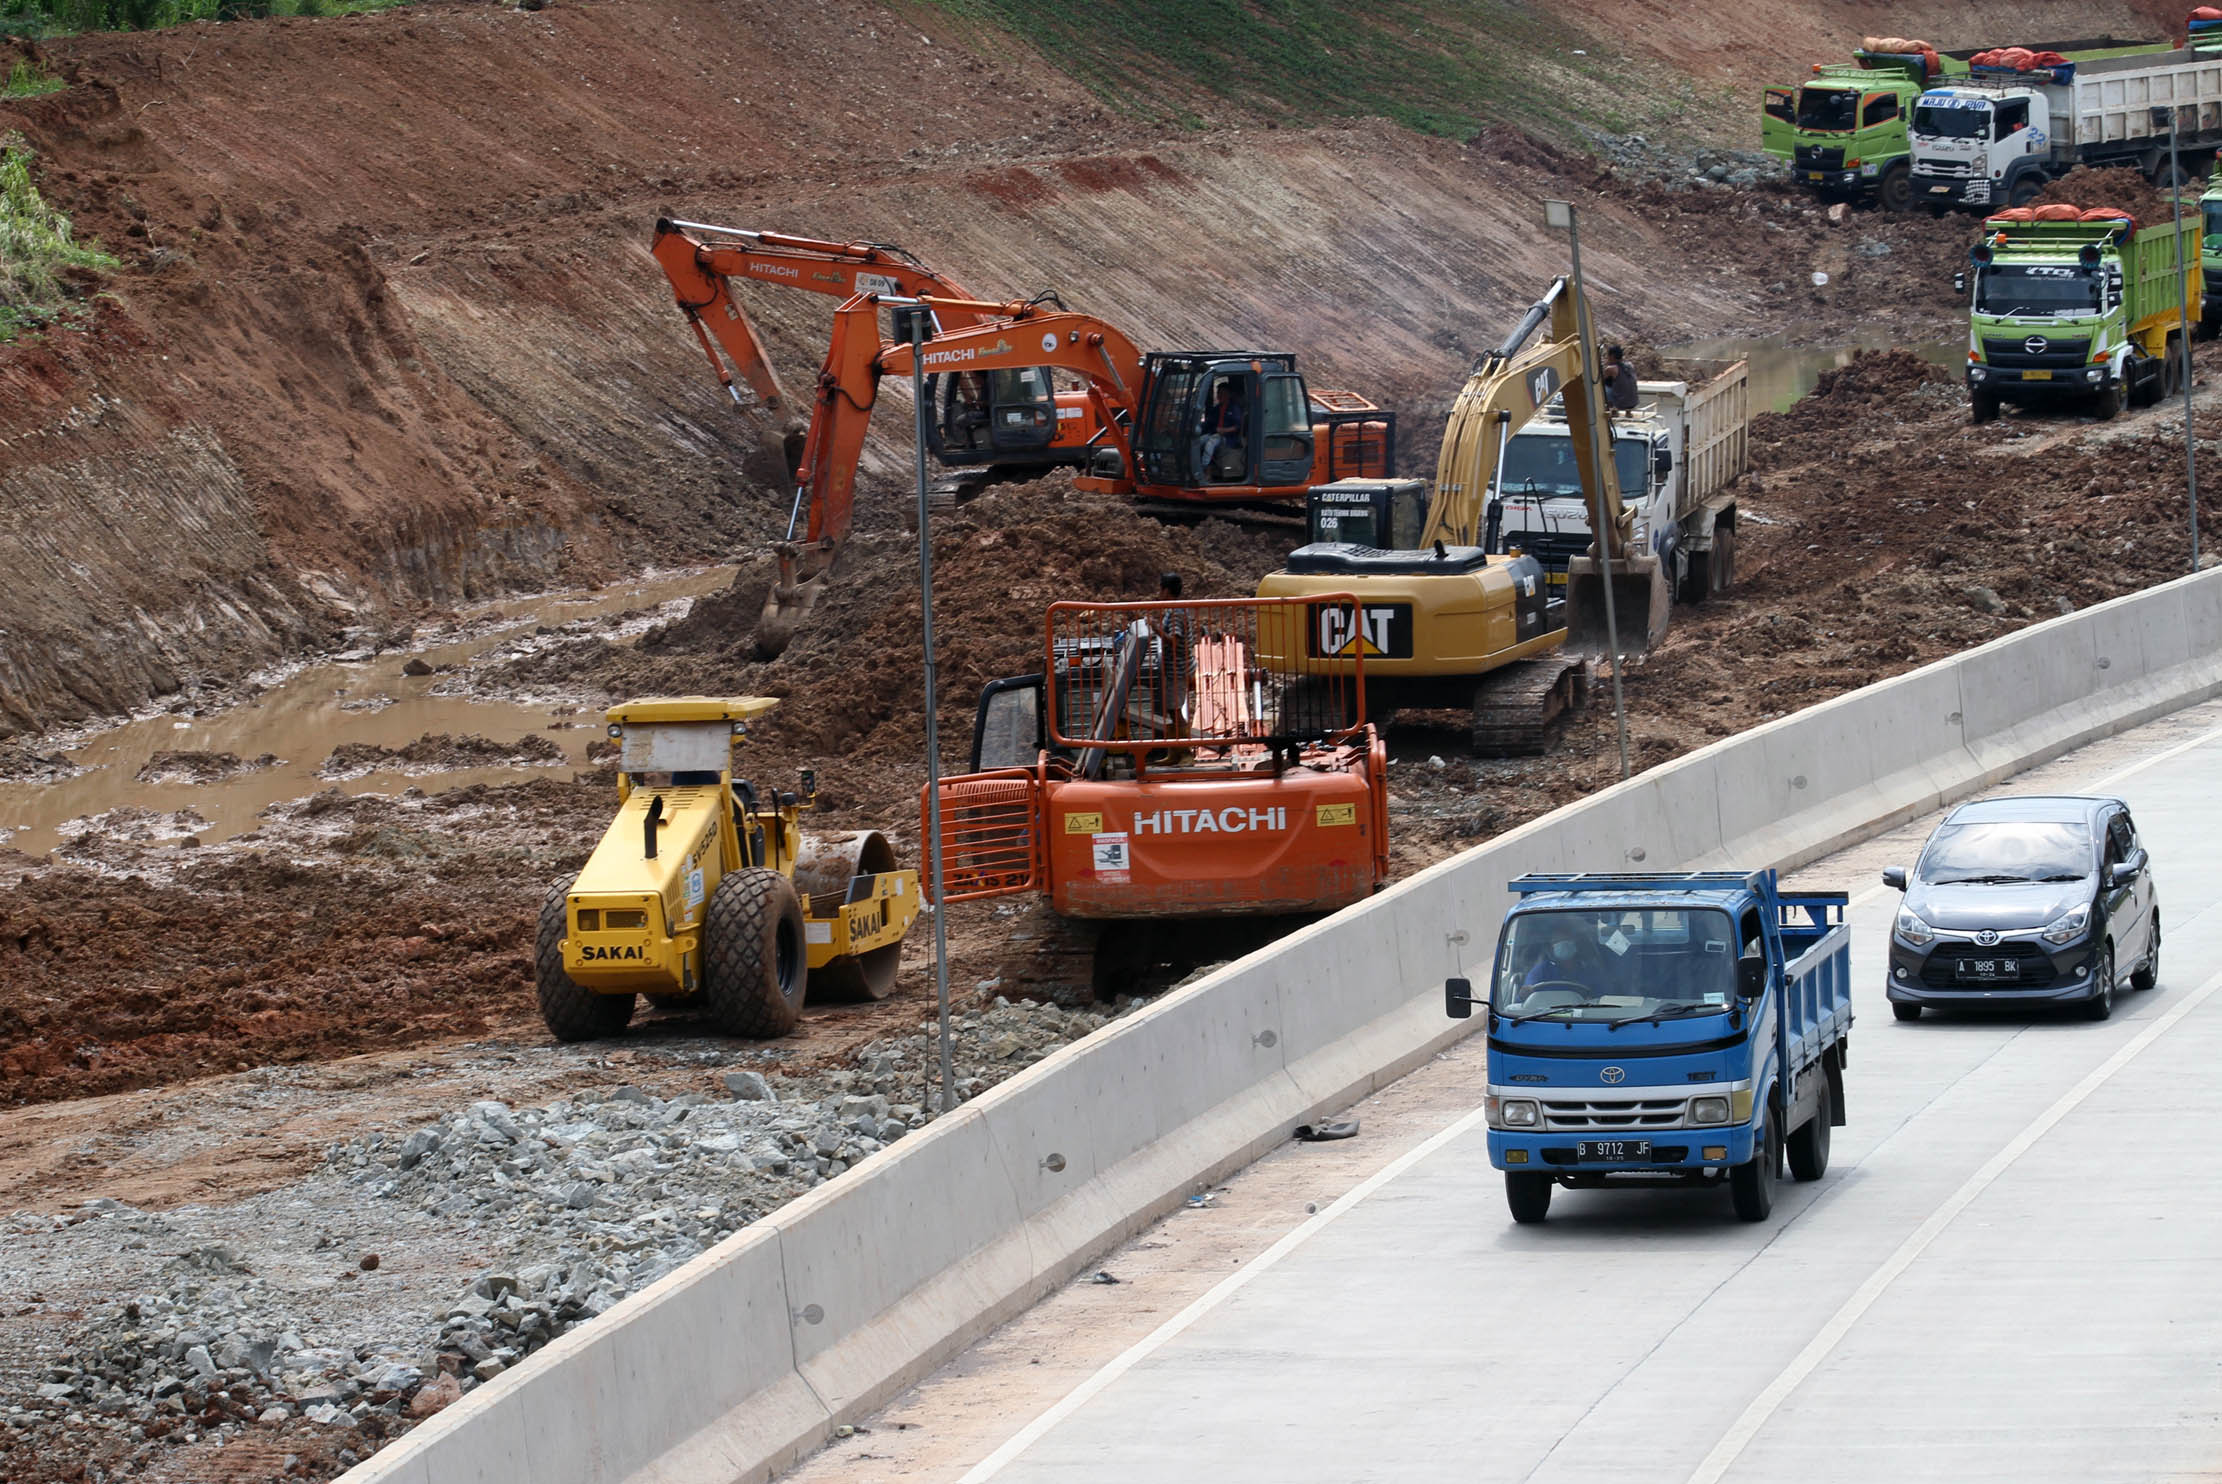 Nampak sejumlah pekerja menggunakan alat berat menyelesaikan pembangunan jalan tol Serpong - Balaraja (Serbaraja) di kawasan Rawa Buntu , Tangerang Selatan Selasa 8 Maret 2022. Foto : Panji Asmoro/TrenAsia